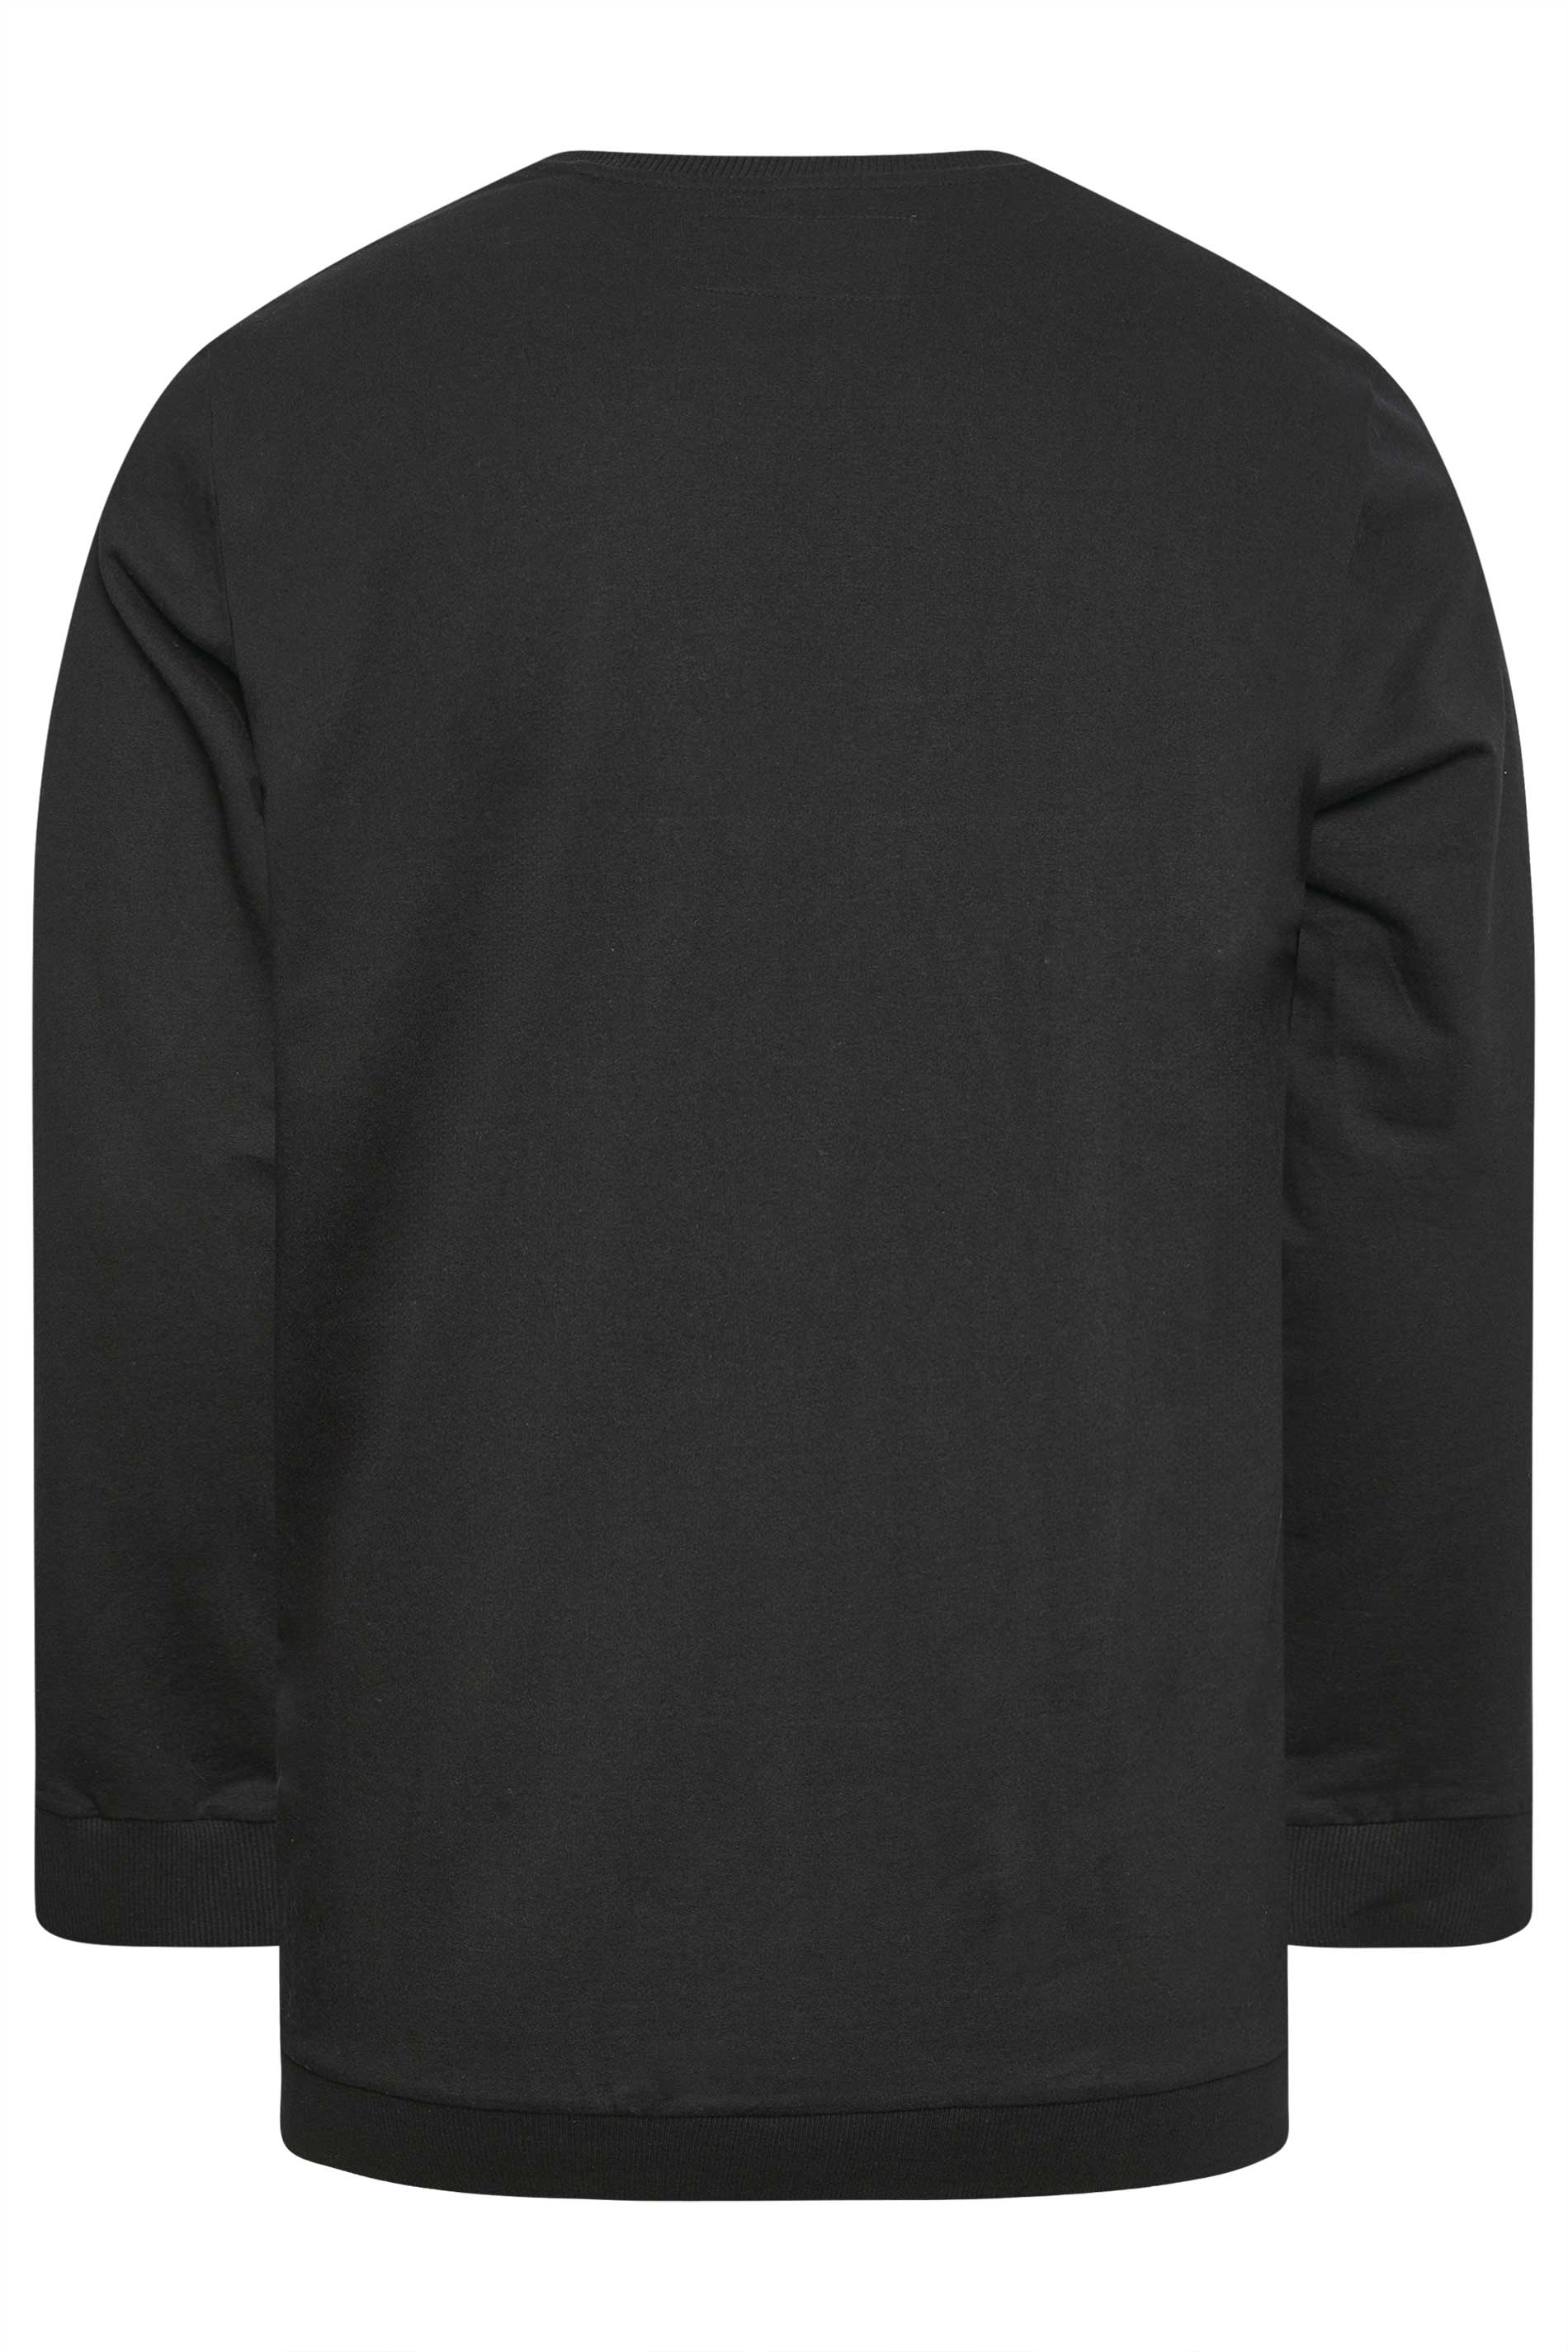 BadRhino Big & Tall Black Skull Print Sweatshirt | BadRhino 3